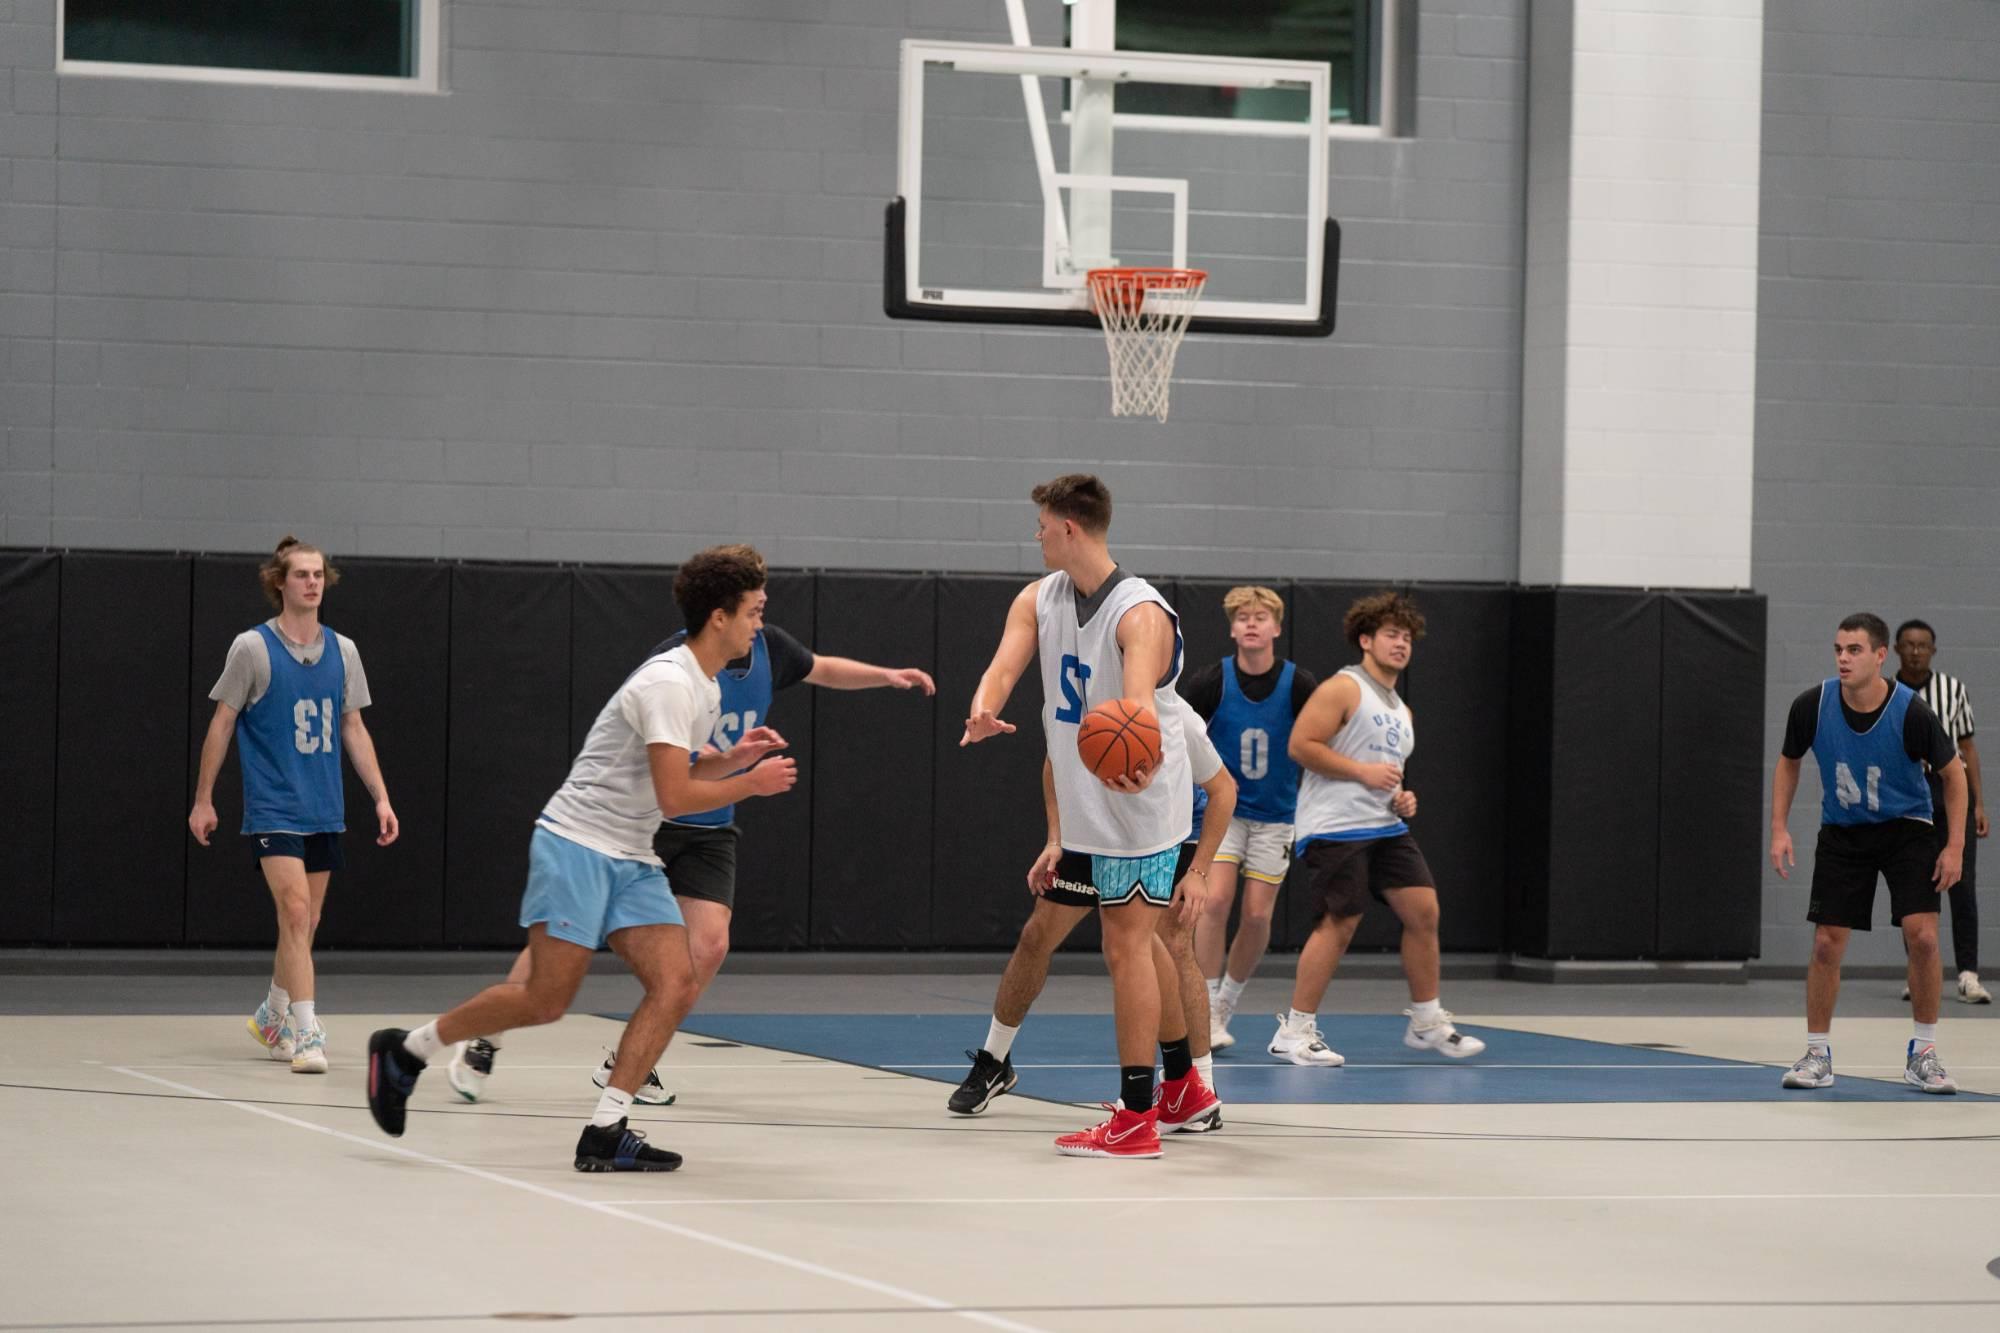 basketball player handing off ball to teammate